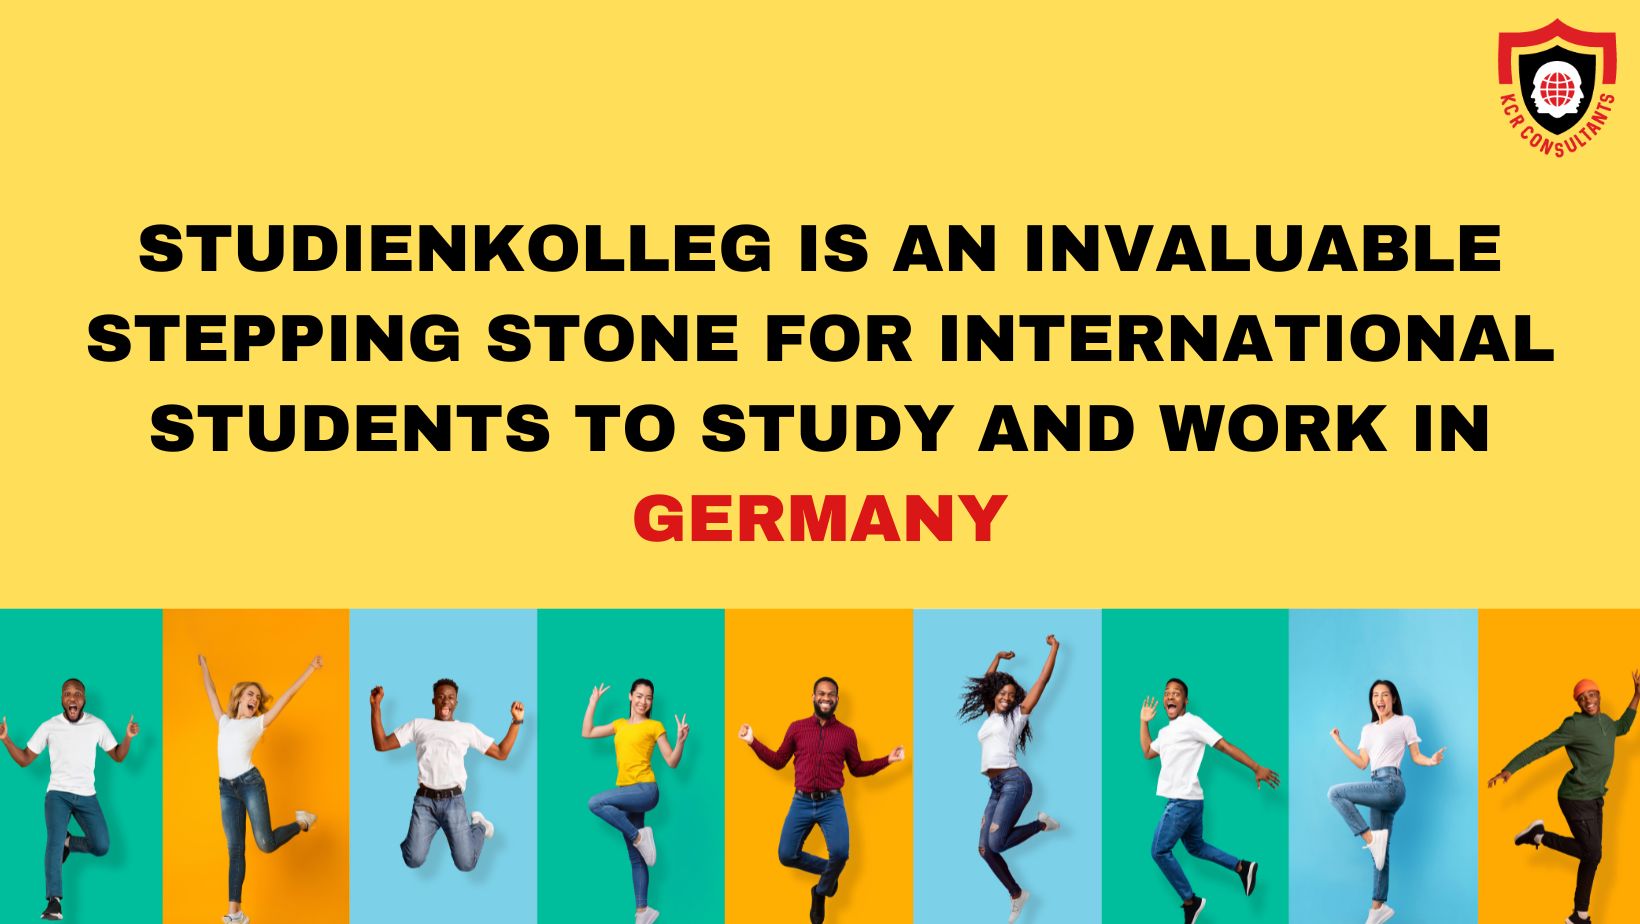 Studienkolleg in Germany - international students (2)